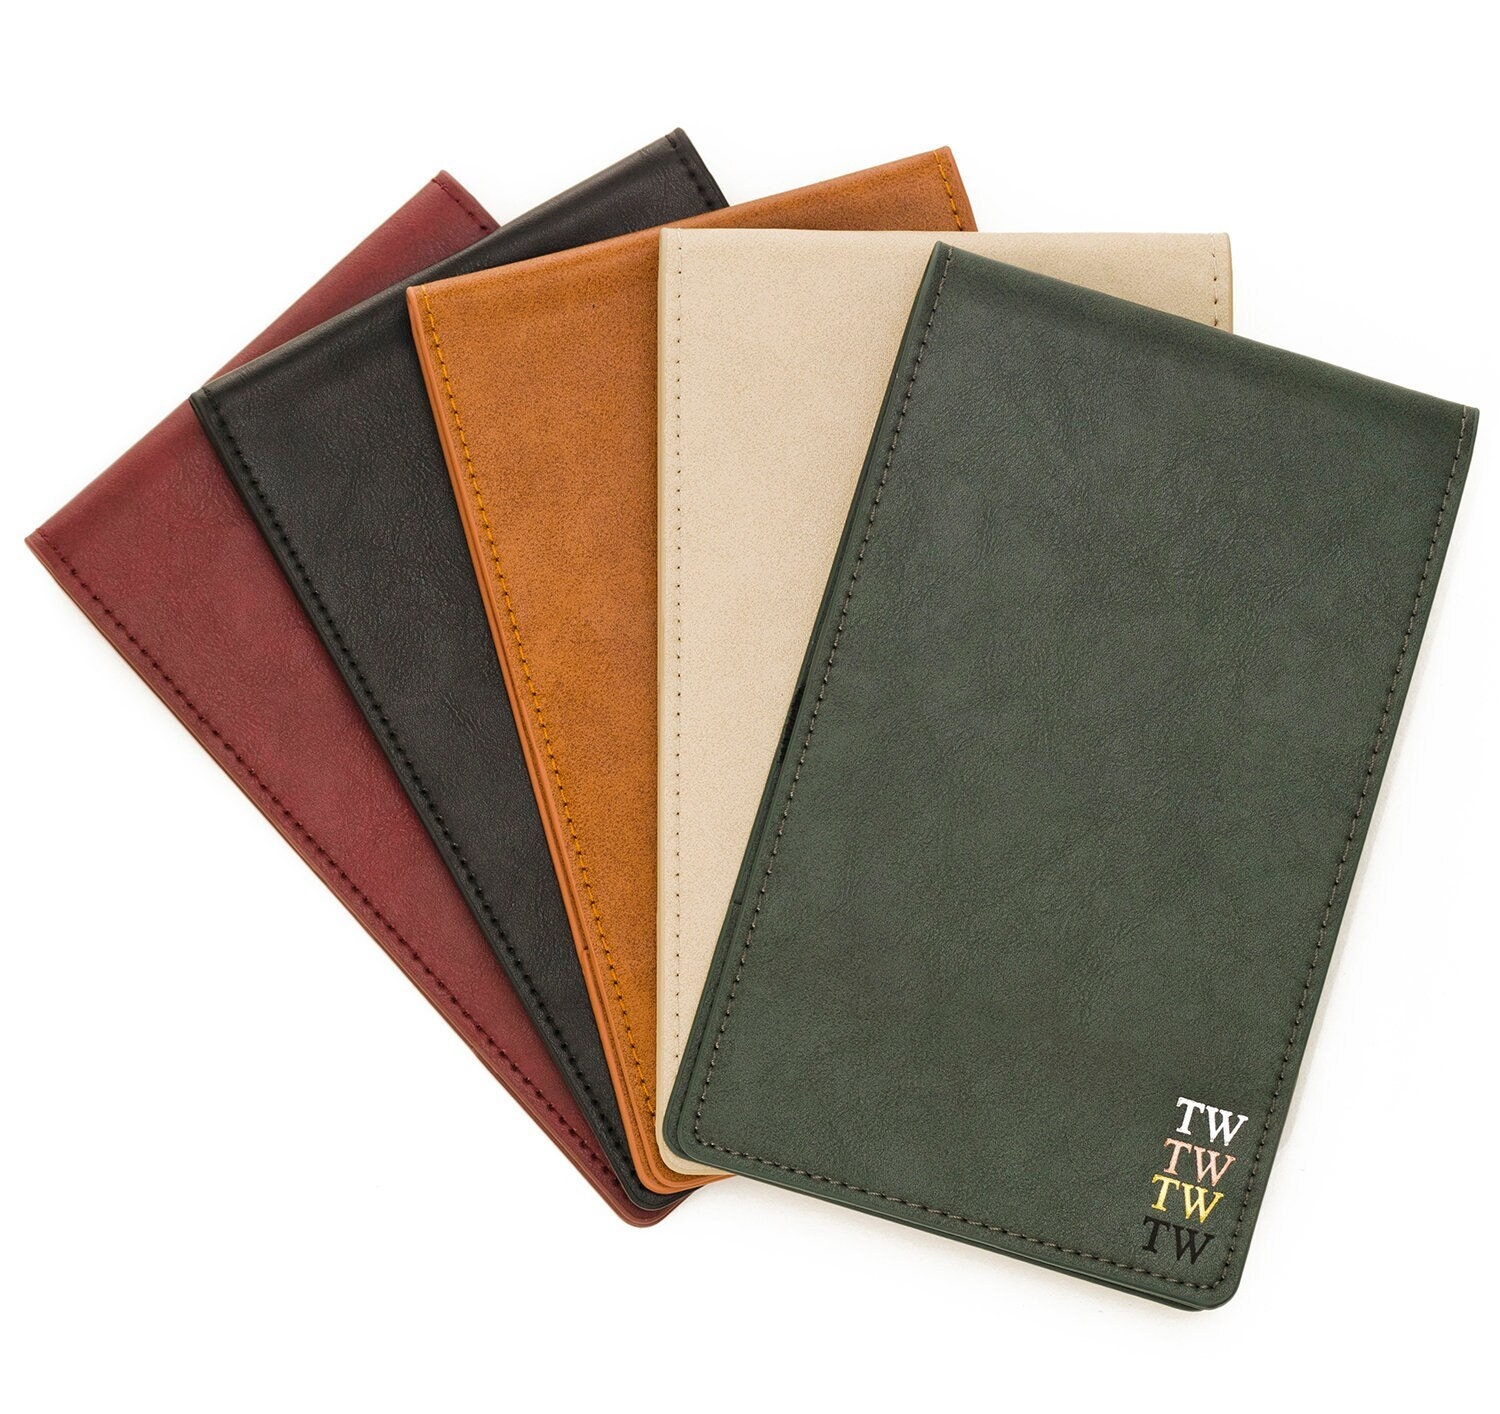 Handmade Leather Yardage Book Cover, Leather Golf Scorecard Holder at  Wholesales Price